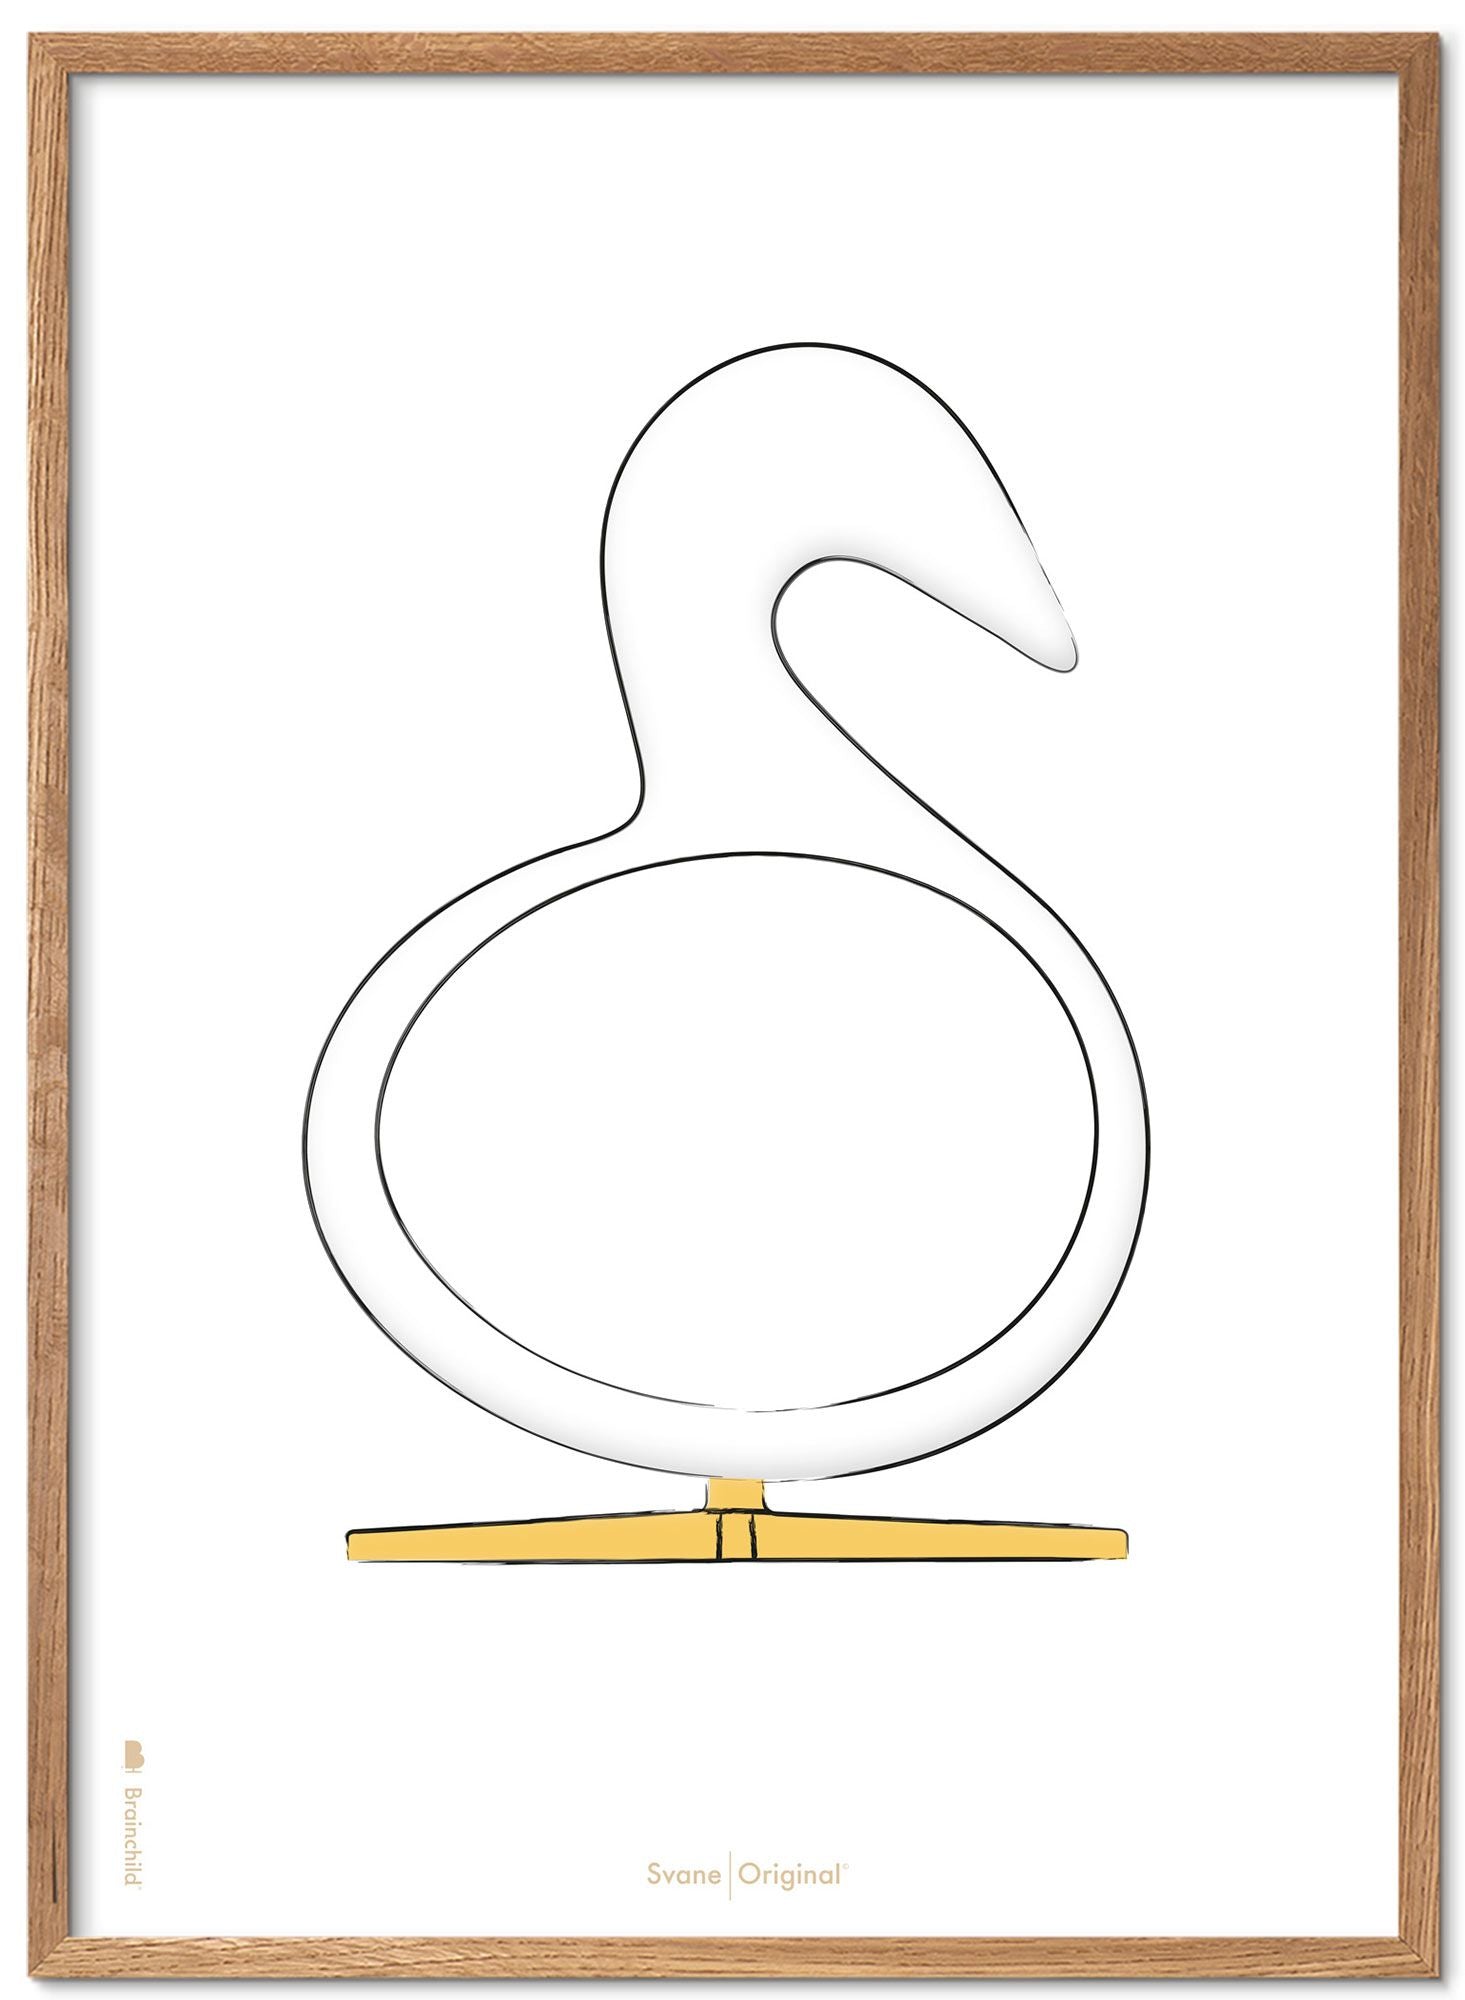 Brainchild Swan Design Sketch Poster Frame Made Of Light Wood 70x100 Cm, White Background